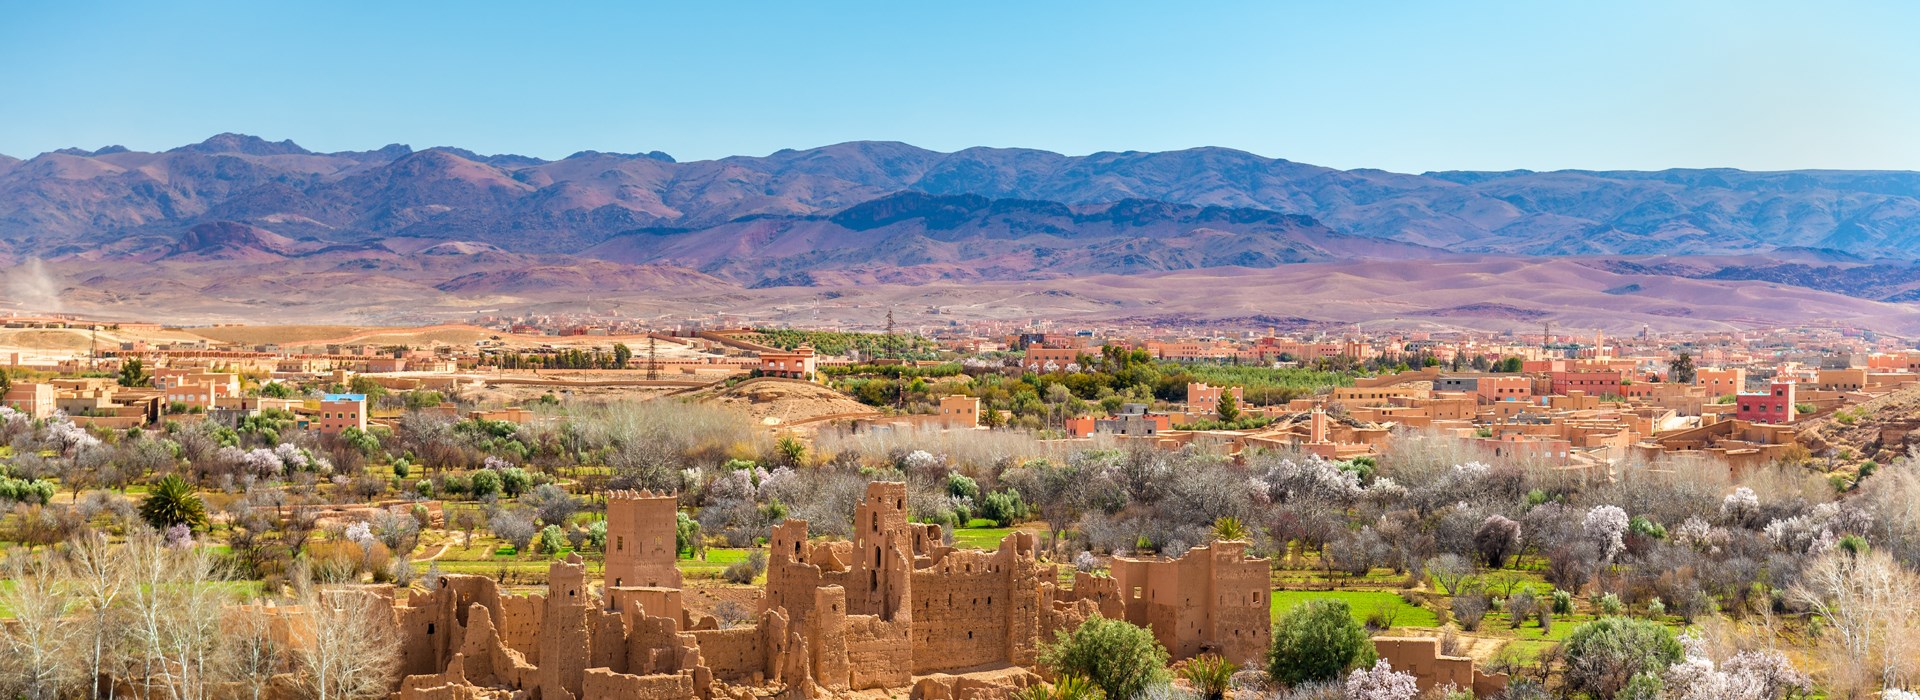 Visiter La Vallée du Dadès - Maroc